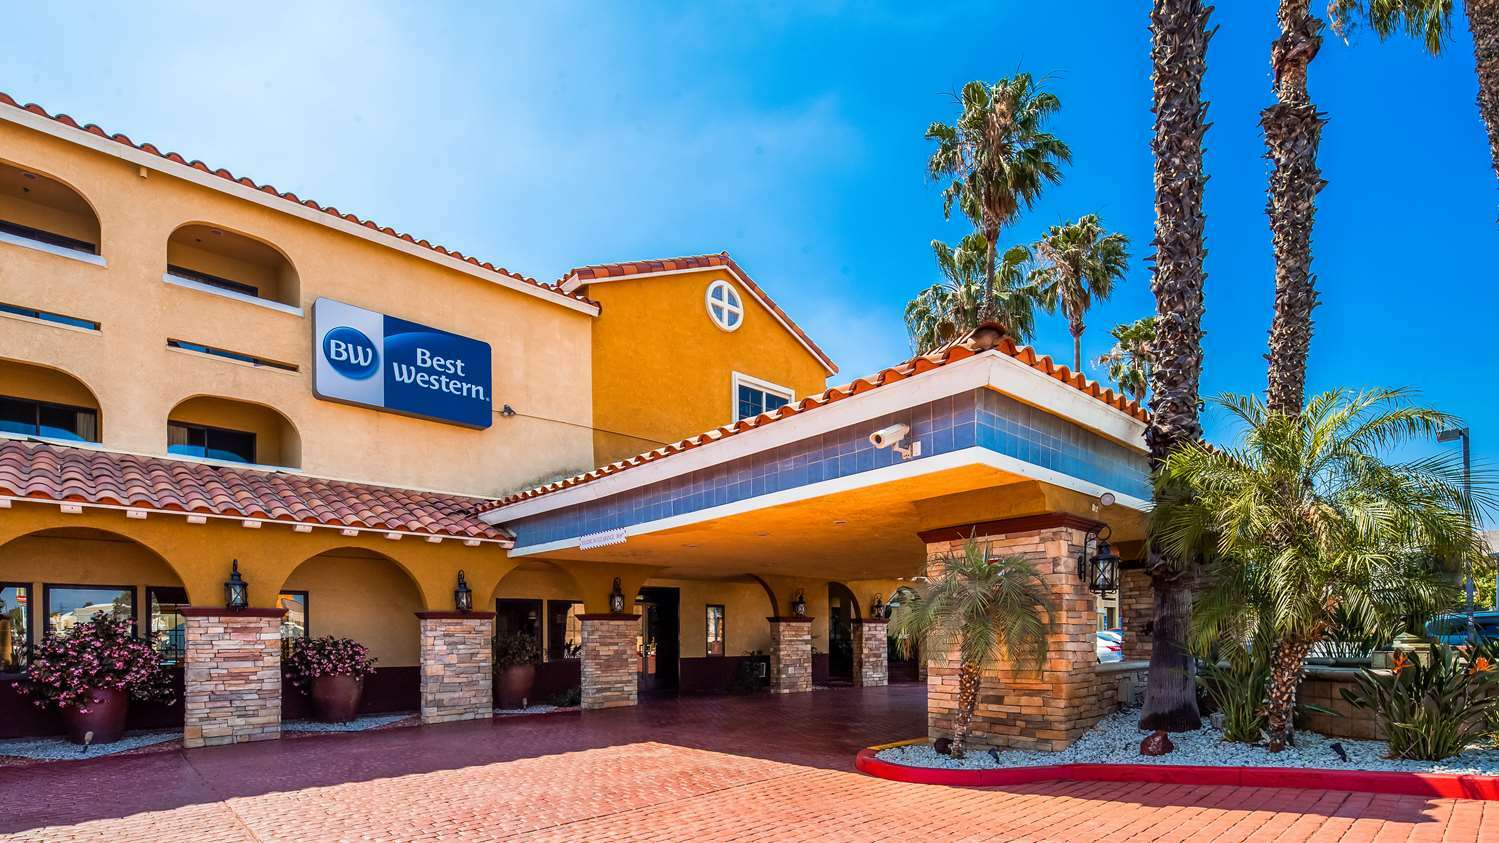 Photo of Best Western Moreno Valley Hotel & Suites, Moreno Valley, CA